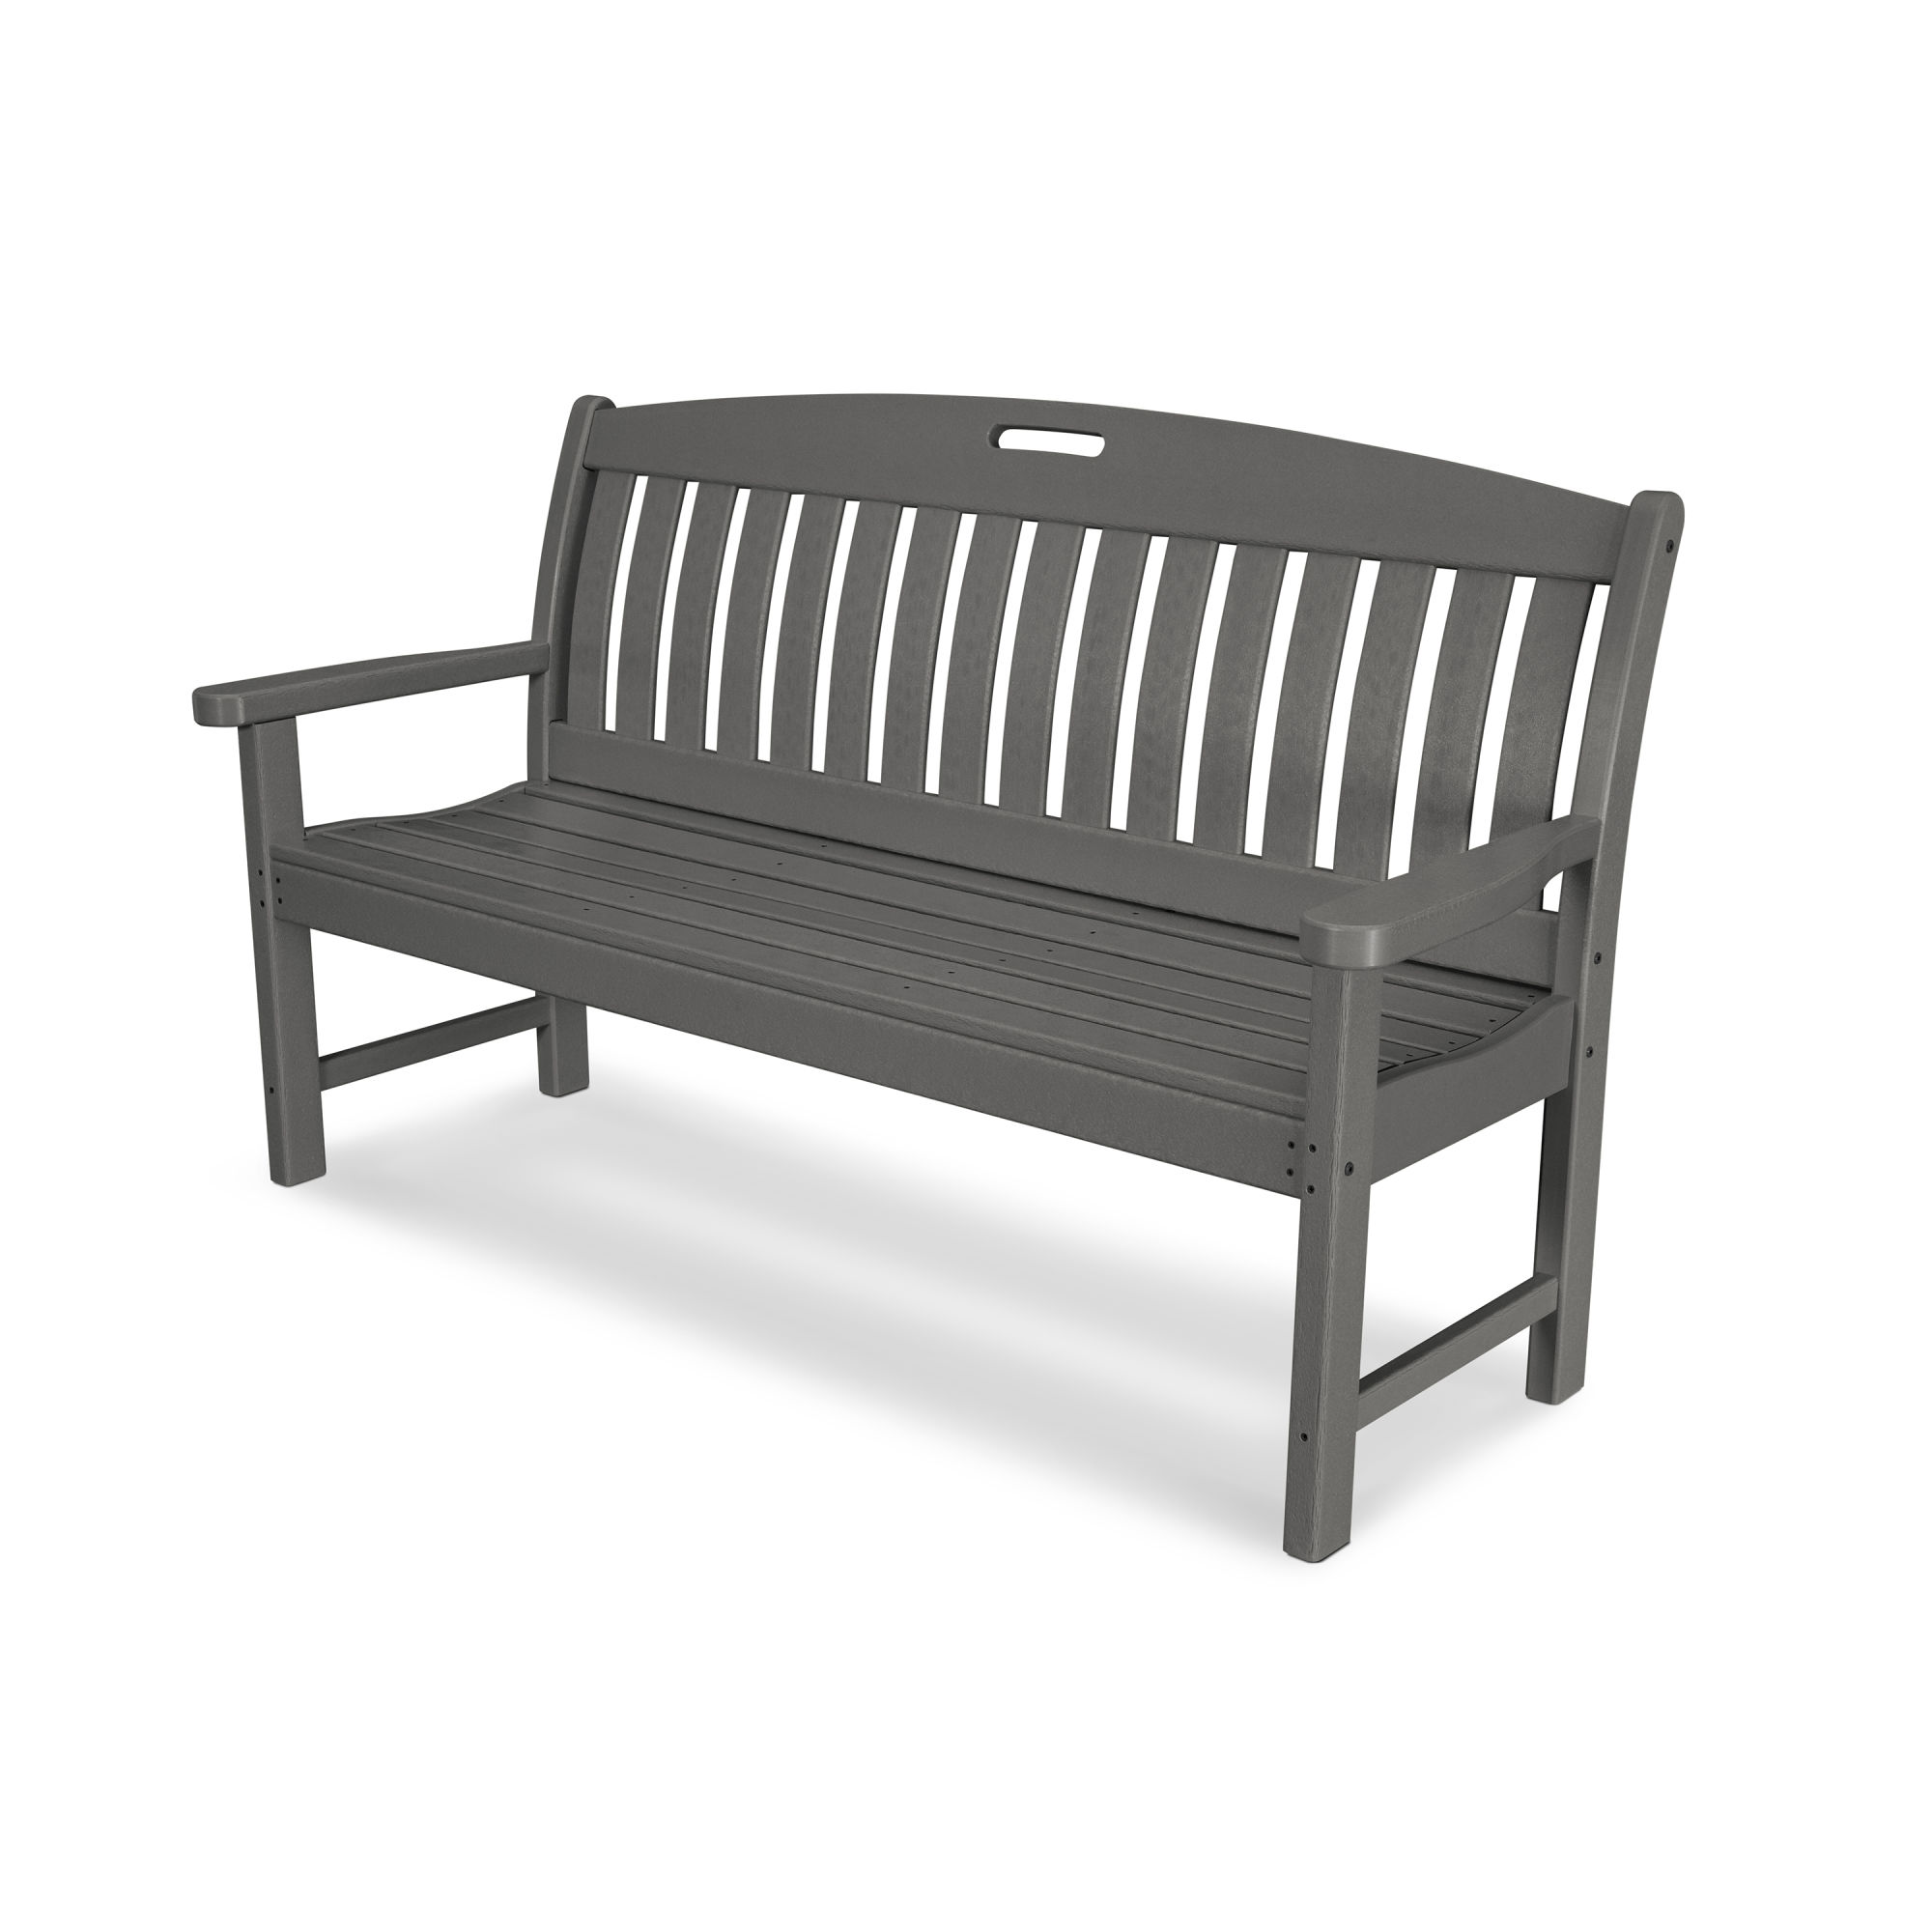 POLYWOOD® Bench Seat Cushion - 17.5D x 57.5W x 2.5H